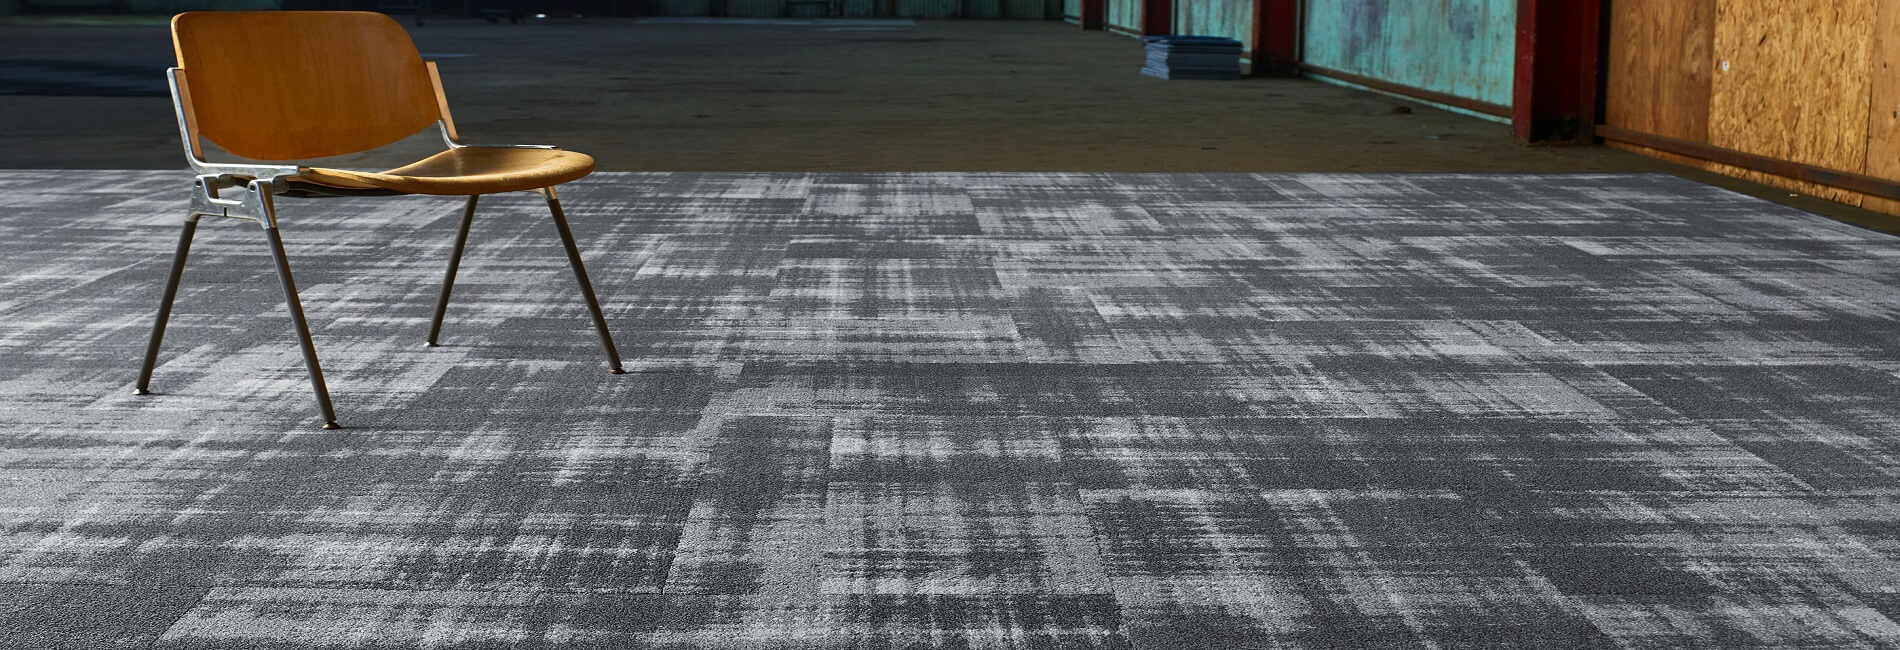 Office Carpet Carpet Floor Tiles 12 Foot Broadloom Carpet Rolls